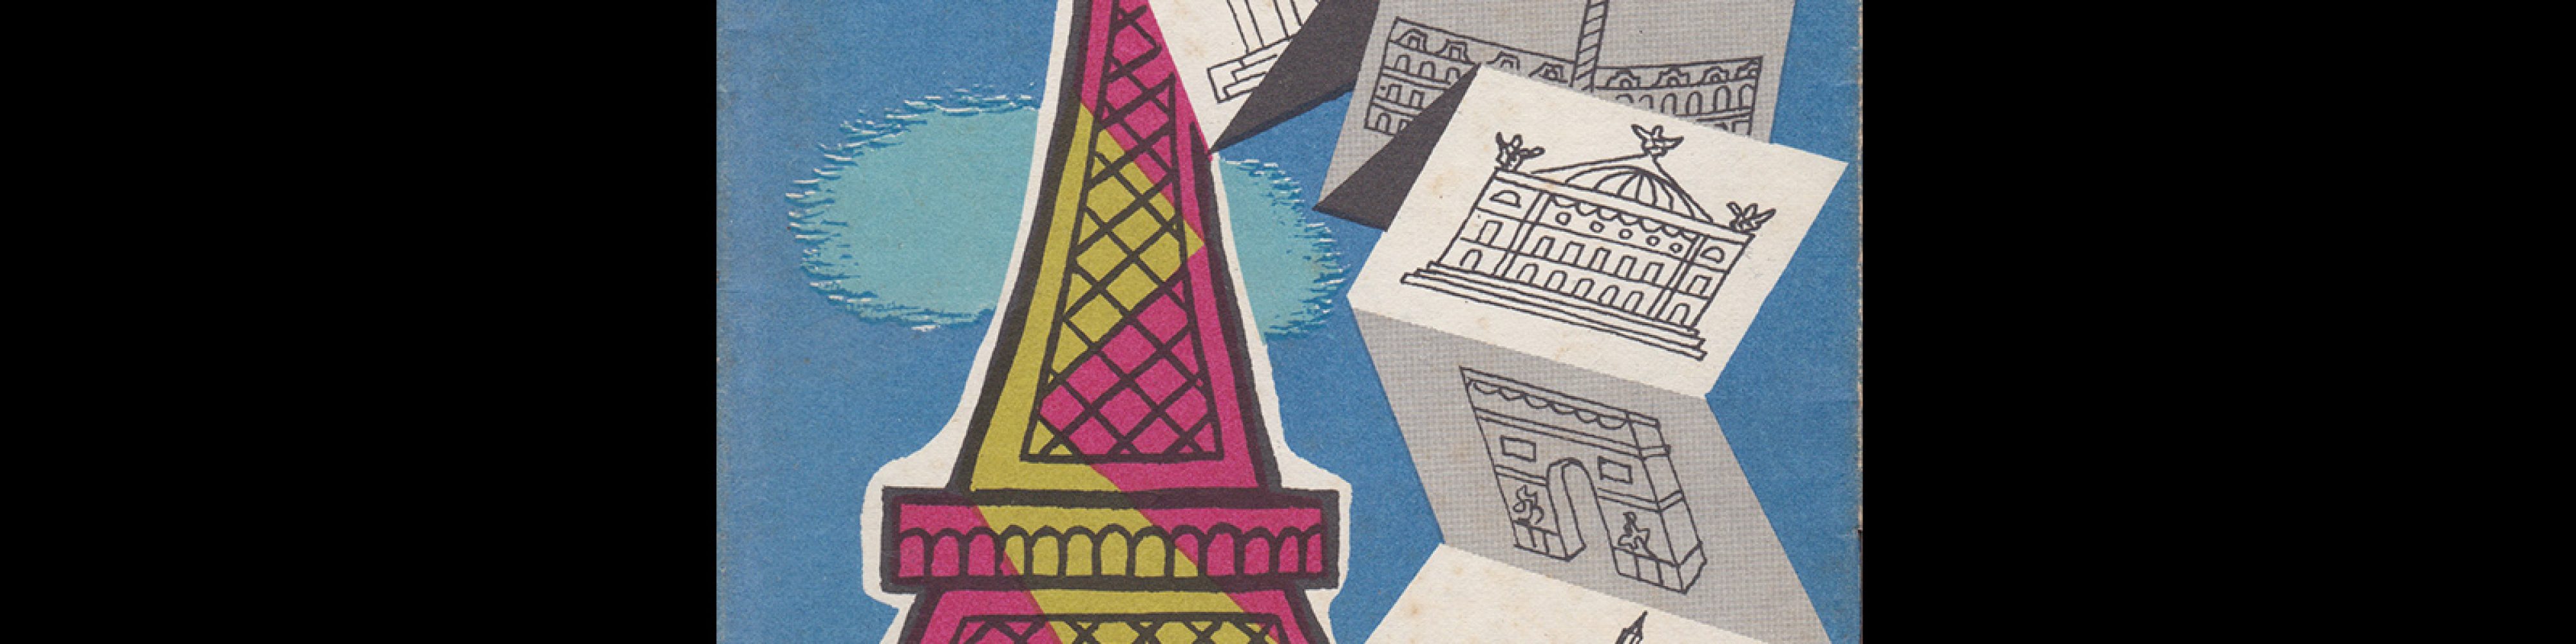 Paris Travel Brochure, 1969. Illustrated by Guy Georget.